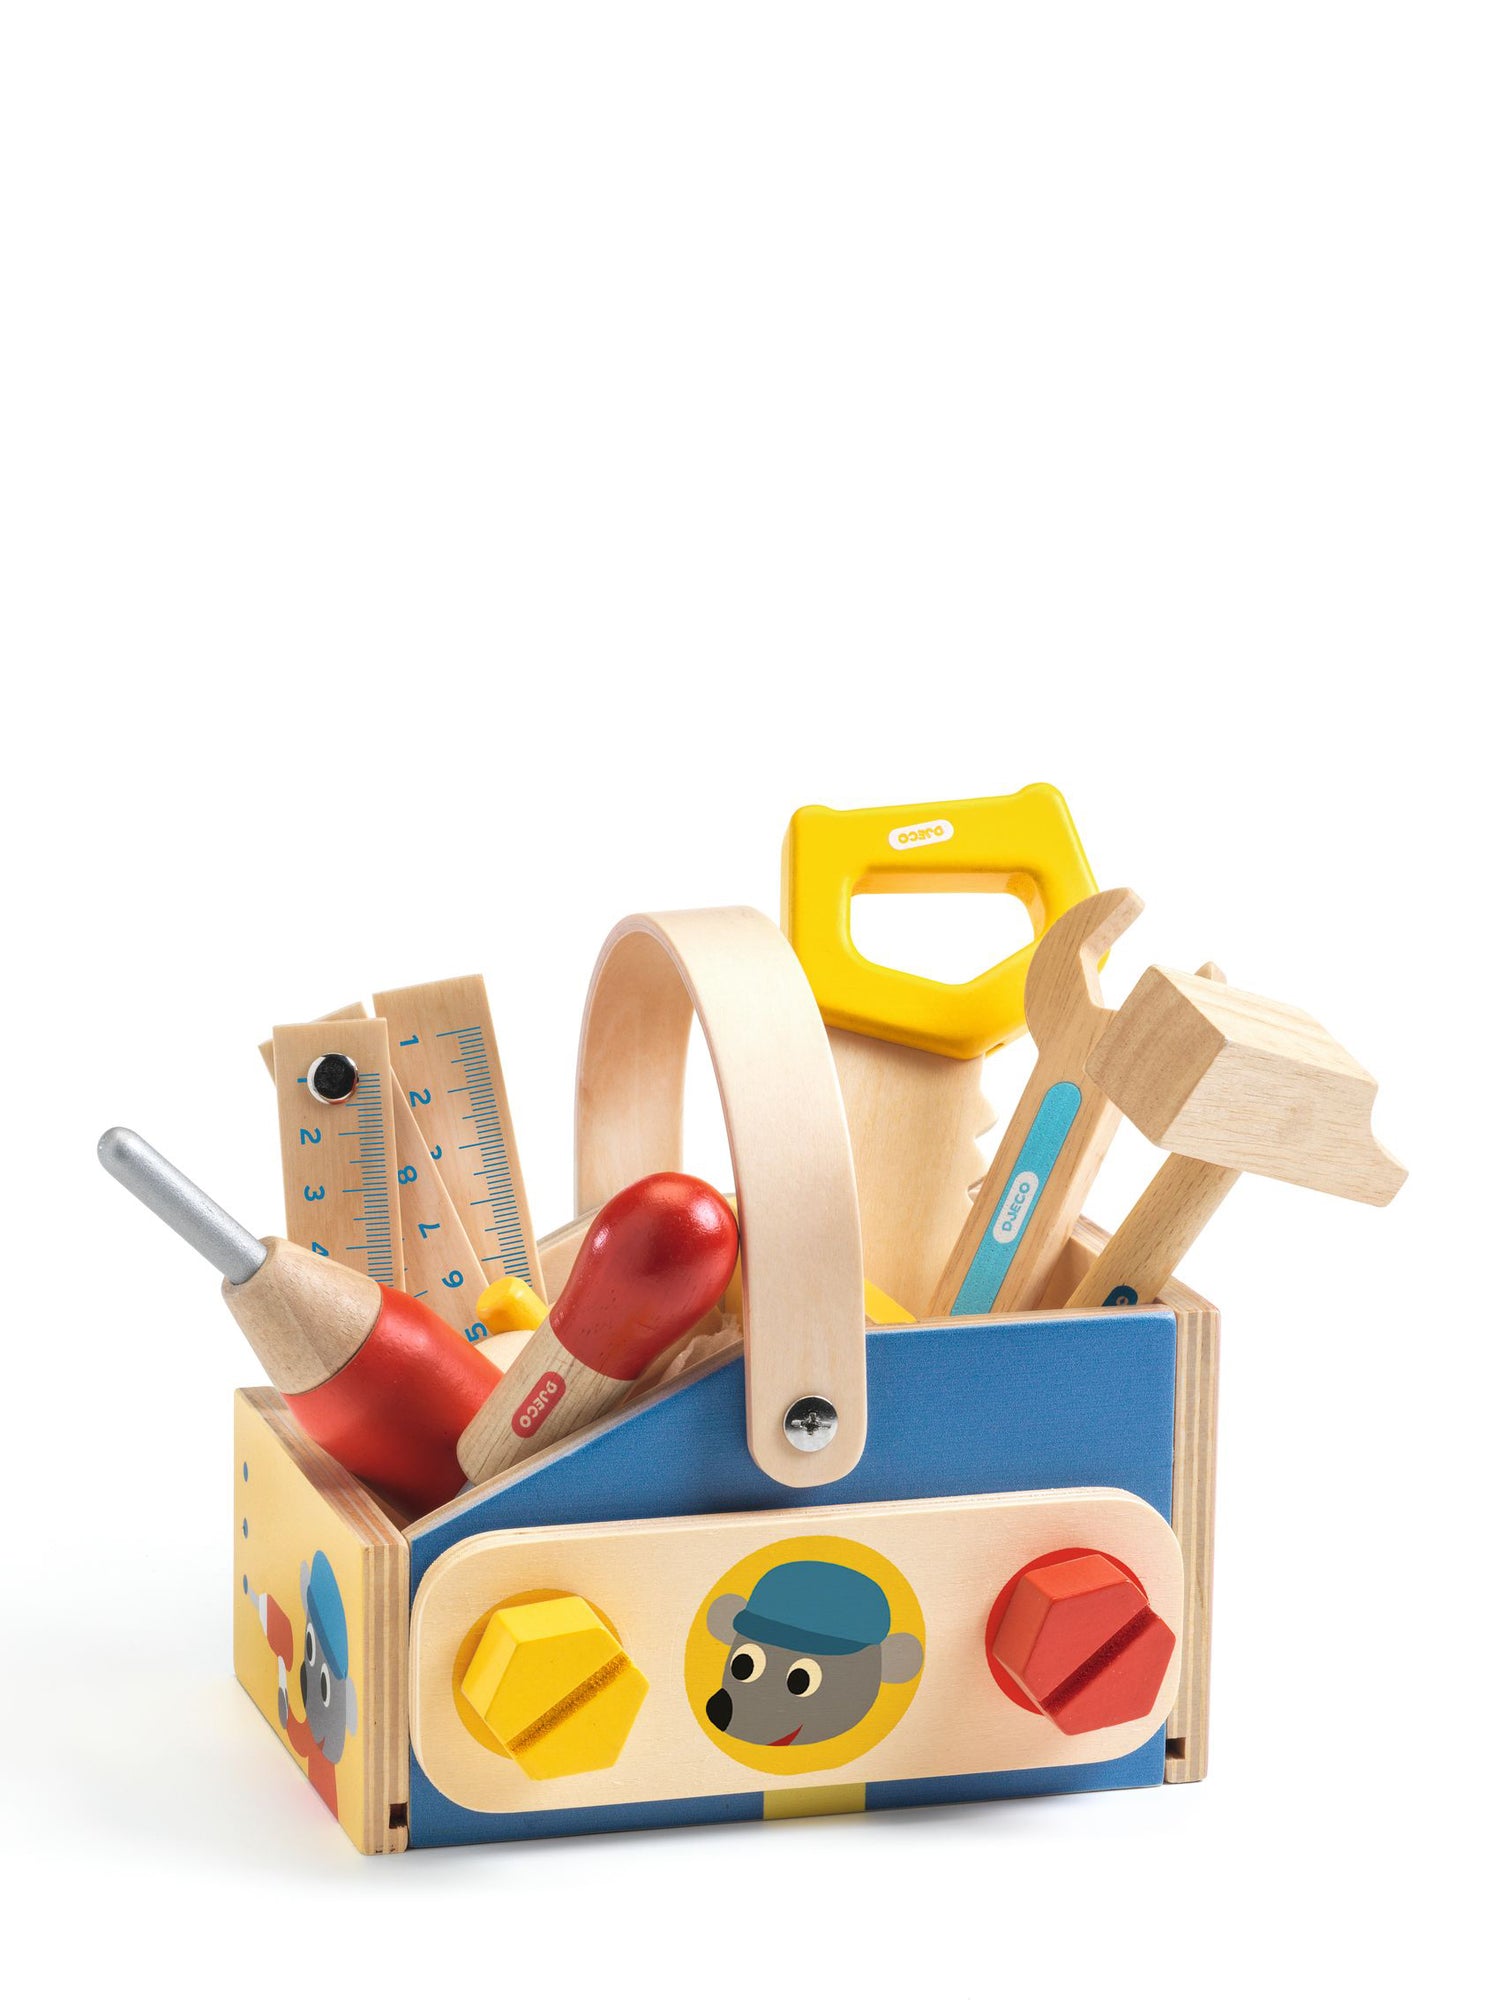 Minibrico kid's toolbox